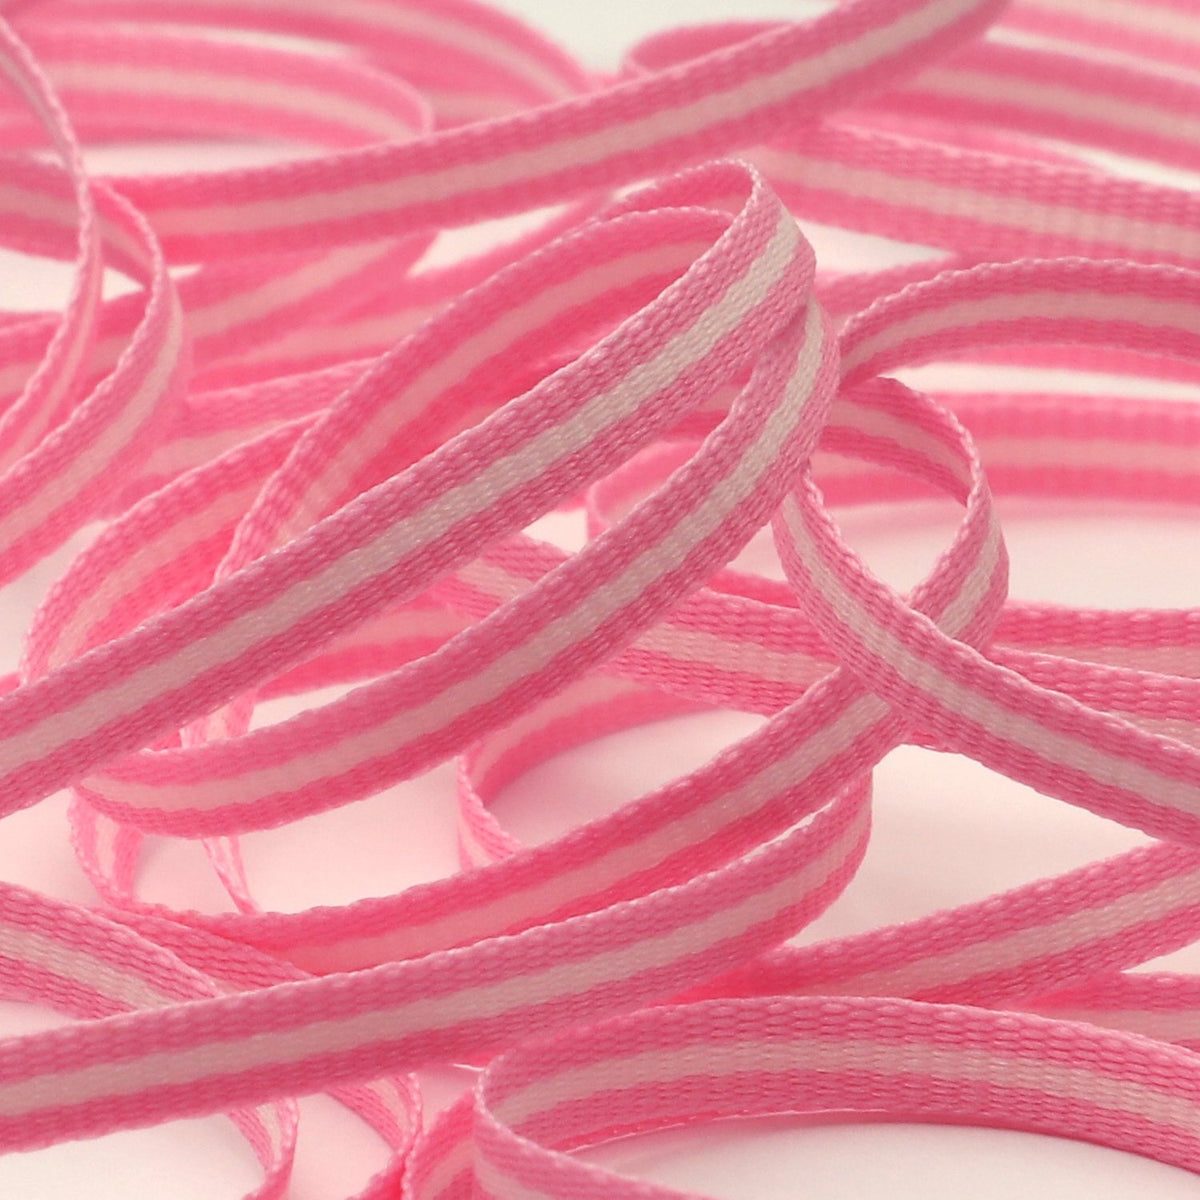 Swirls in hot pink on light pink 1.5 ribbon